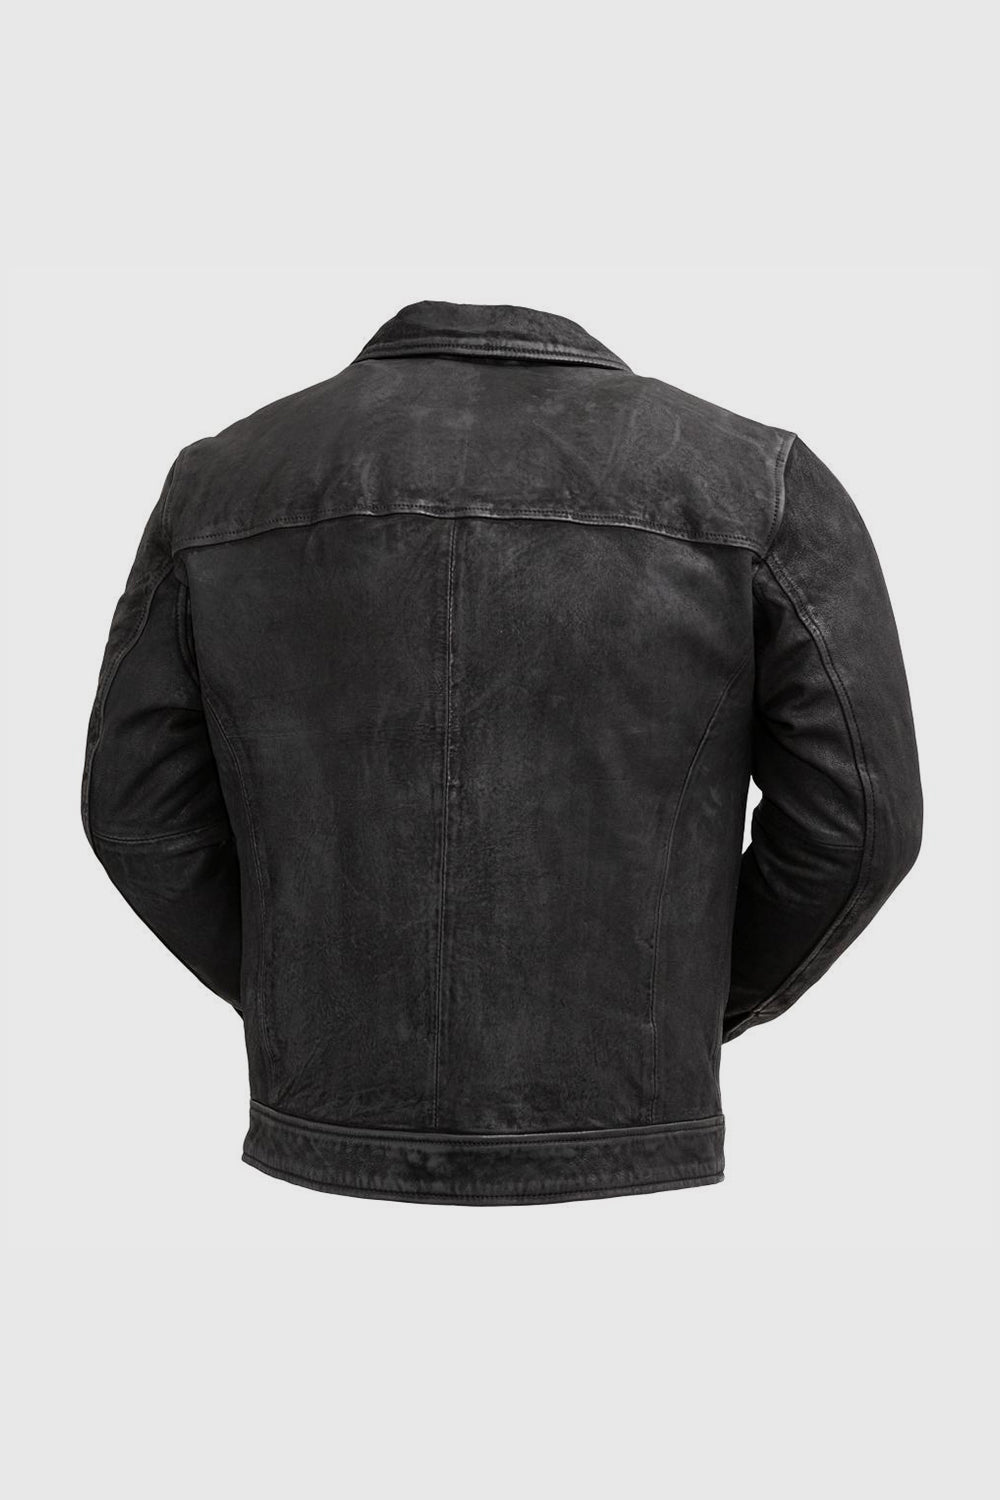 Austin Mens Leather Jacket Men's Leather Jacket Whet Blu NYC   